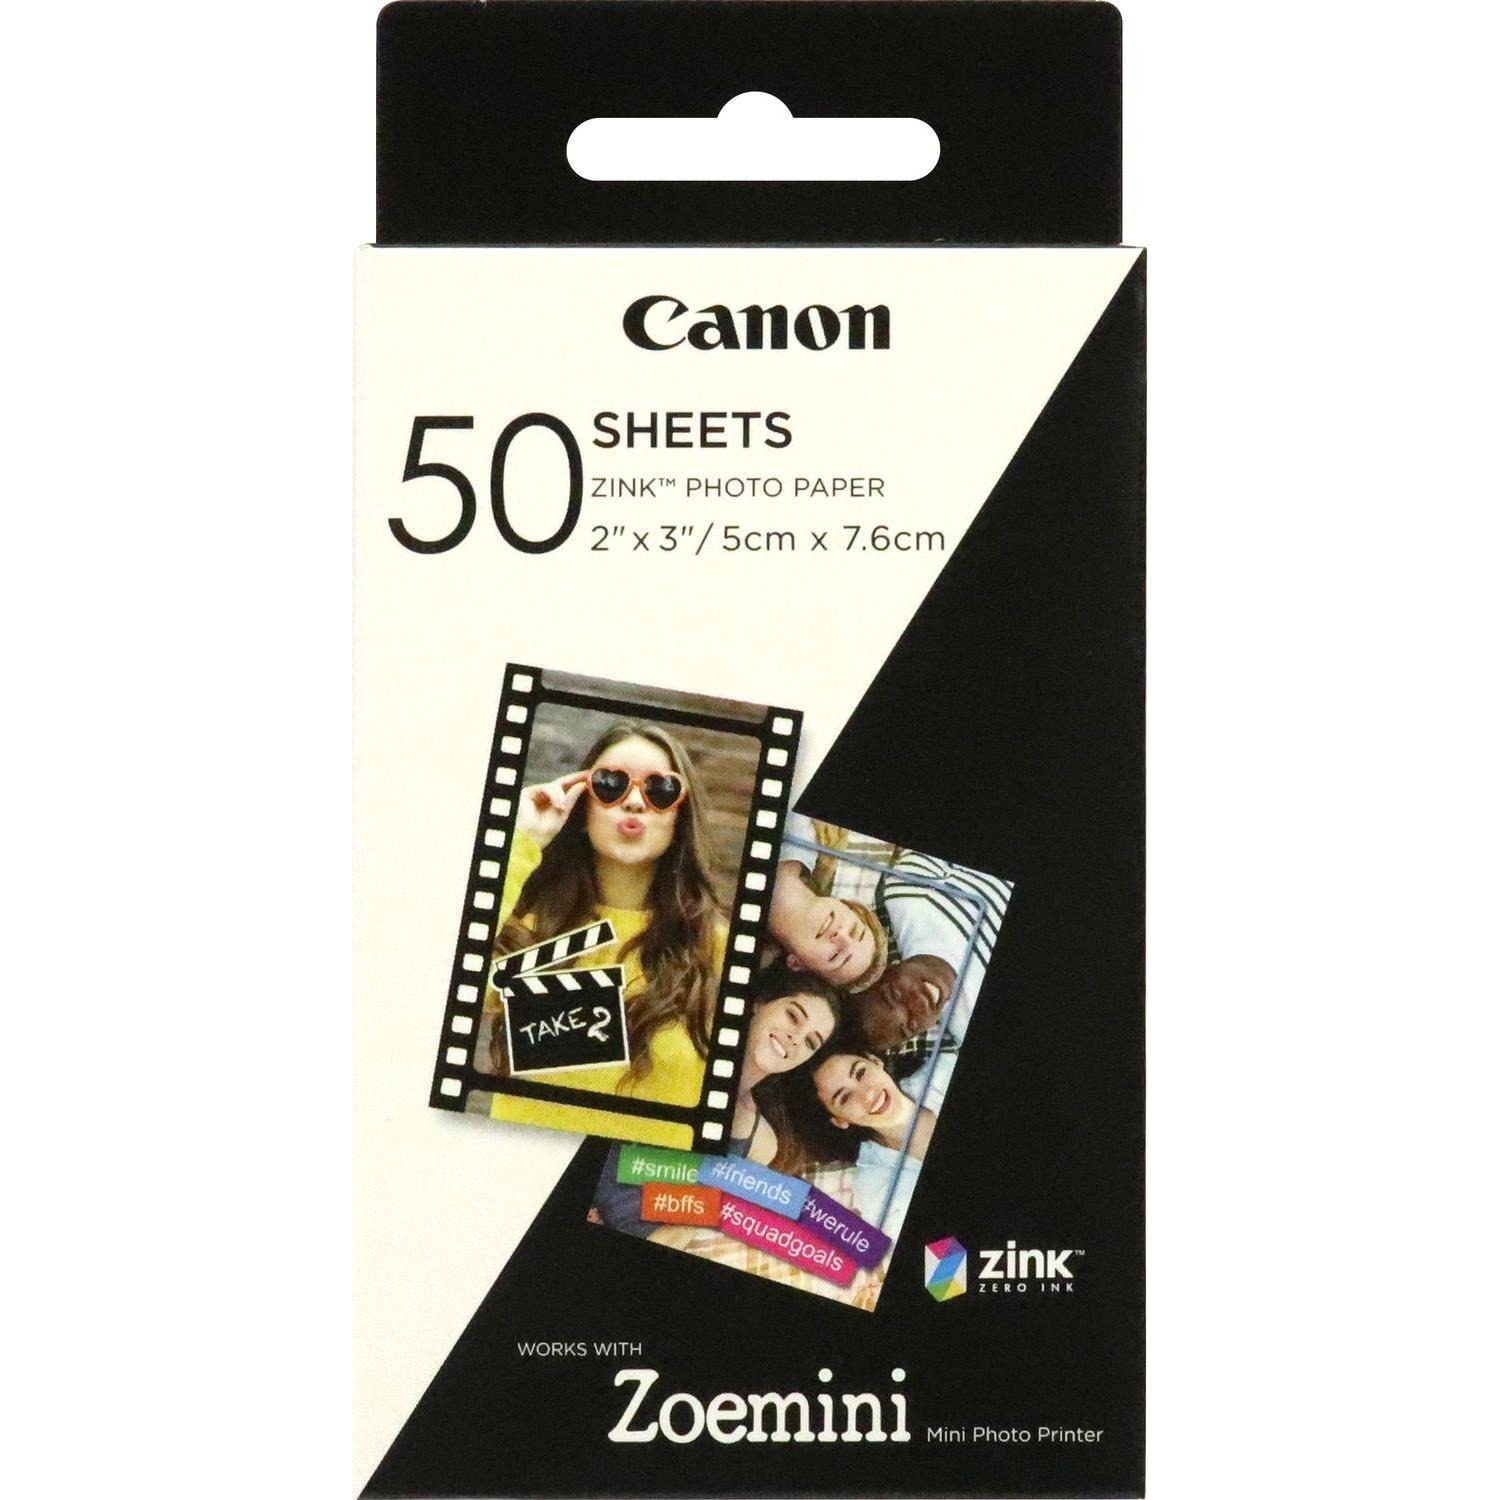 Immagine per Carta Canon per fotocamere istantanee             Zink ZP 50 fogli da DIMOStore